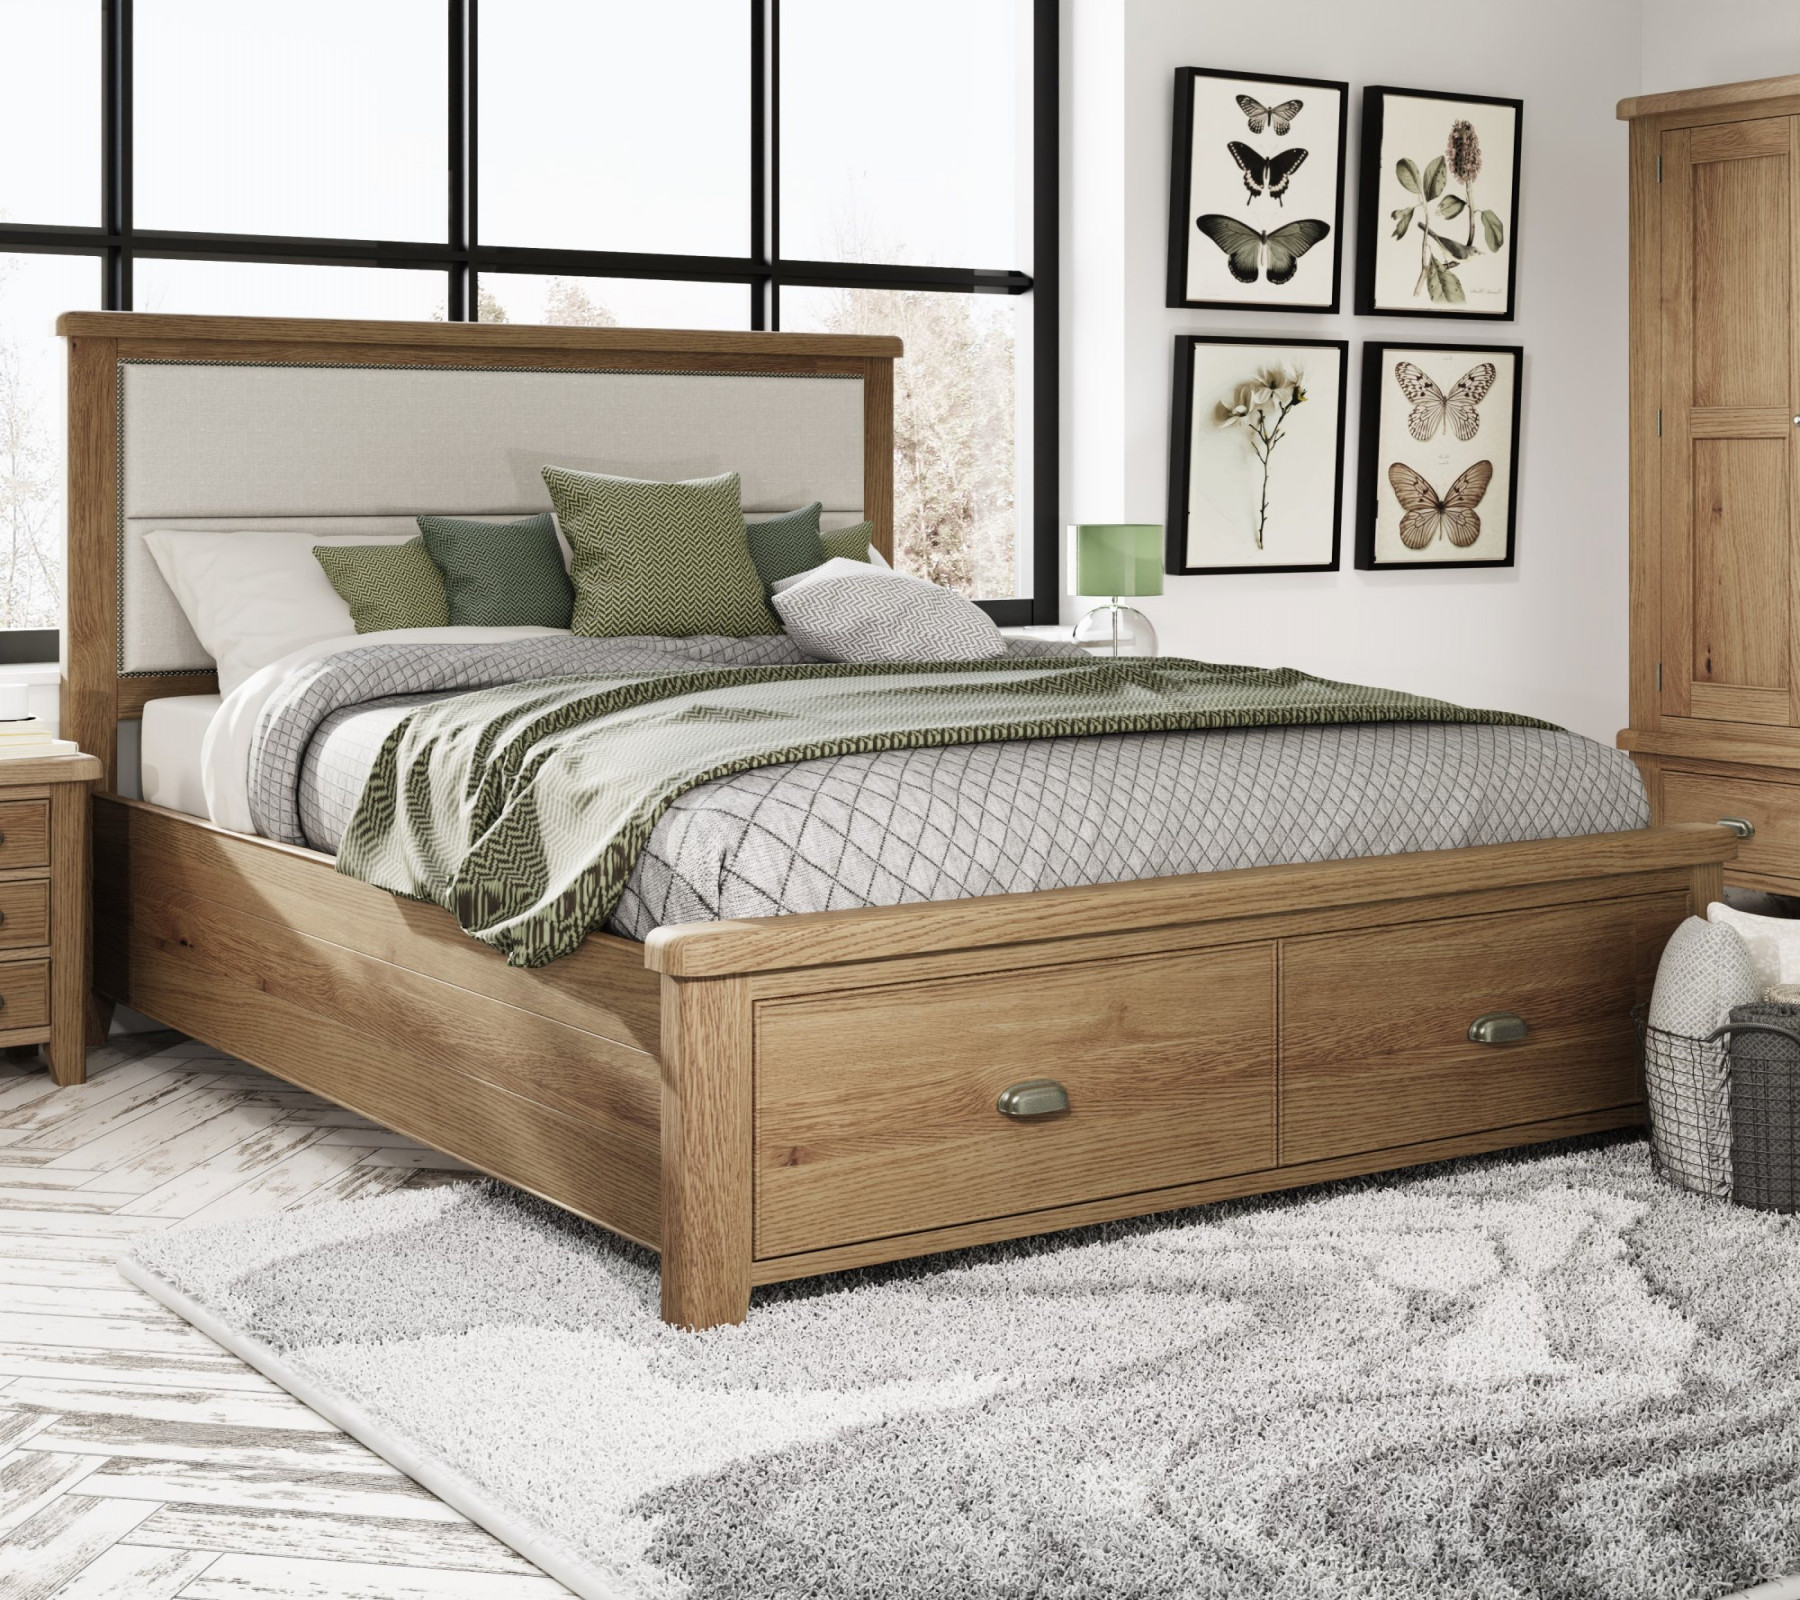 Wood Bed Frame King Size